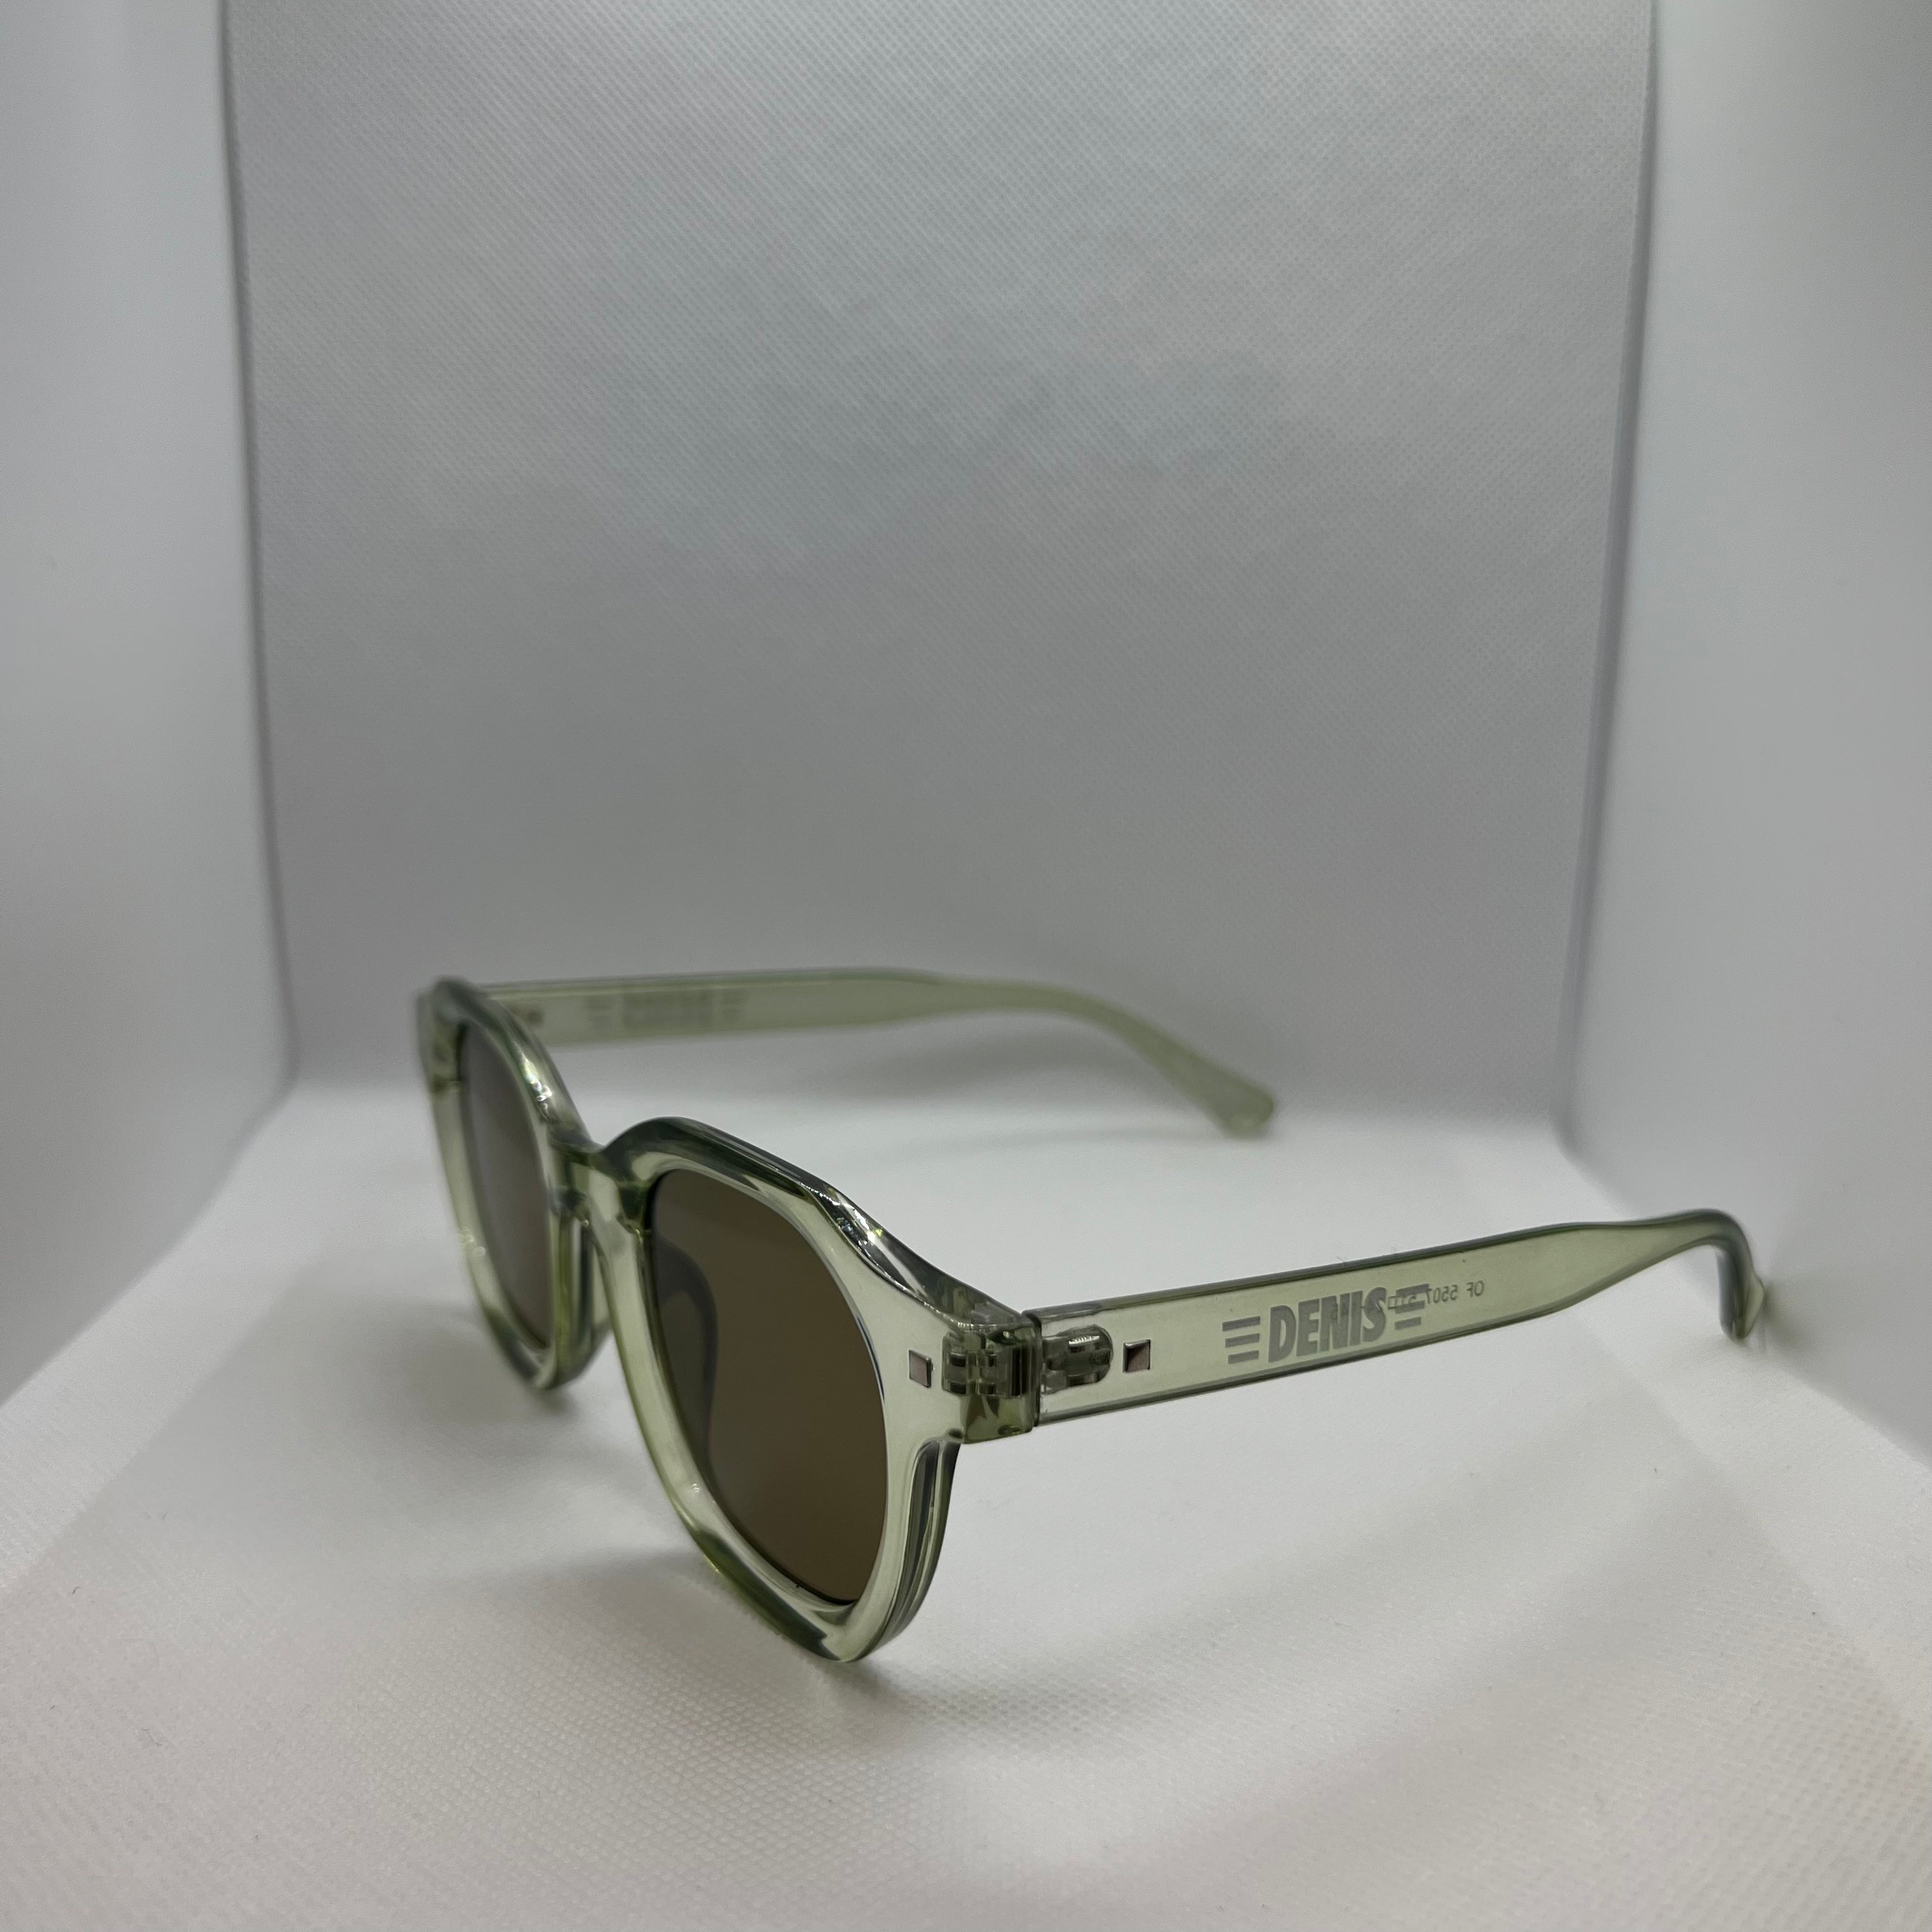 DENIS Sunglasses CREAR FLAME ・Polarized lenses ・